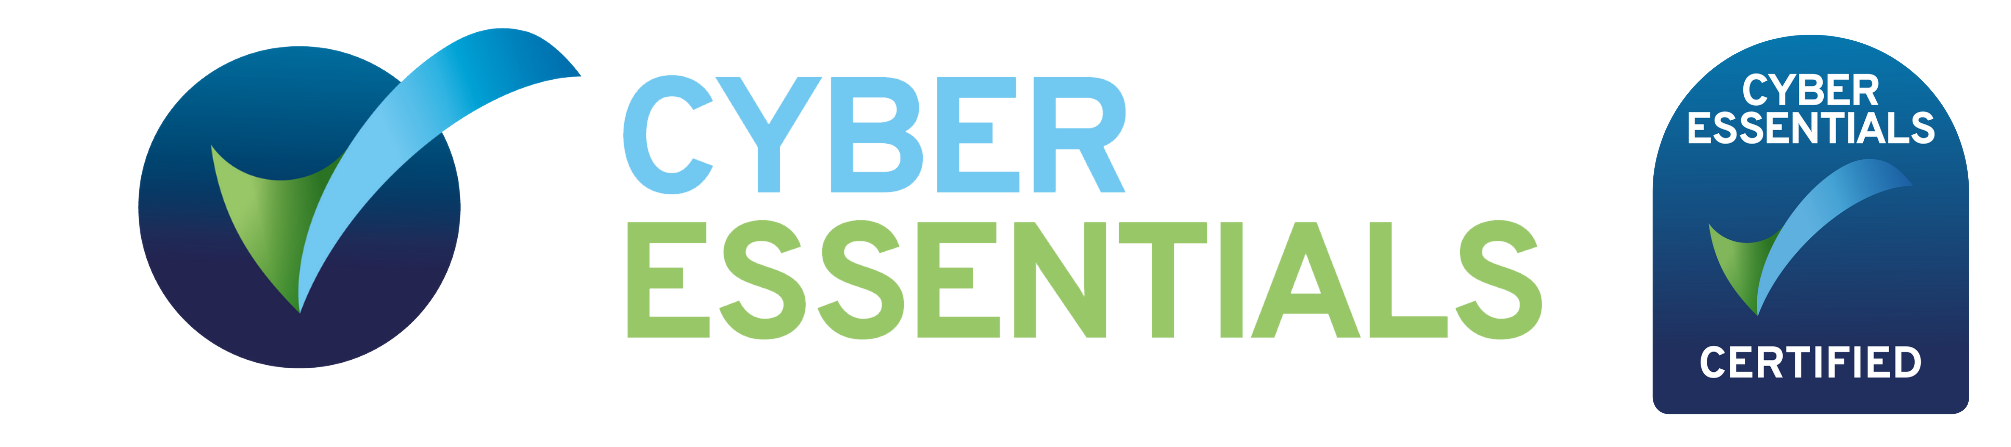 cyber-essentials-transparent-2